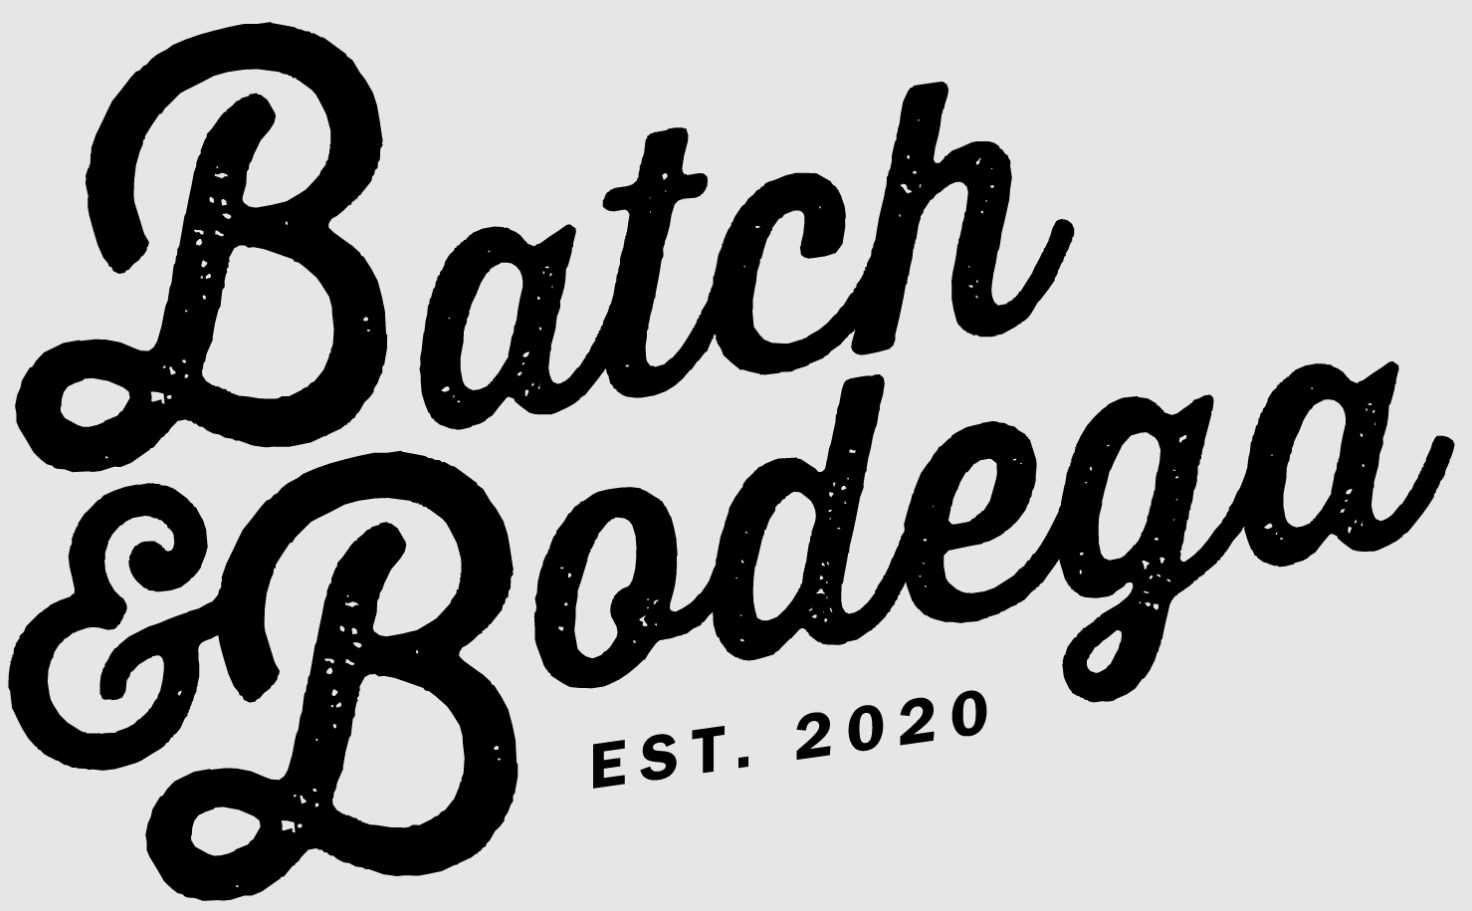 Batch & Bodega